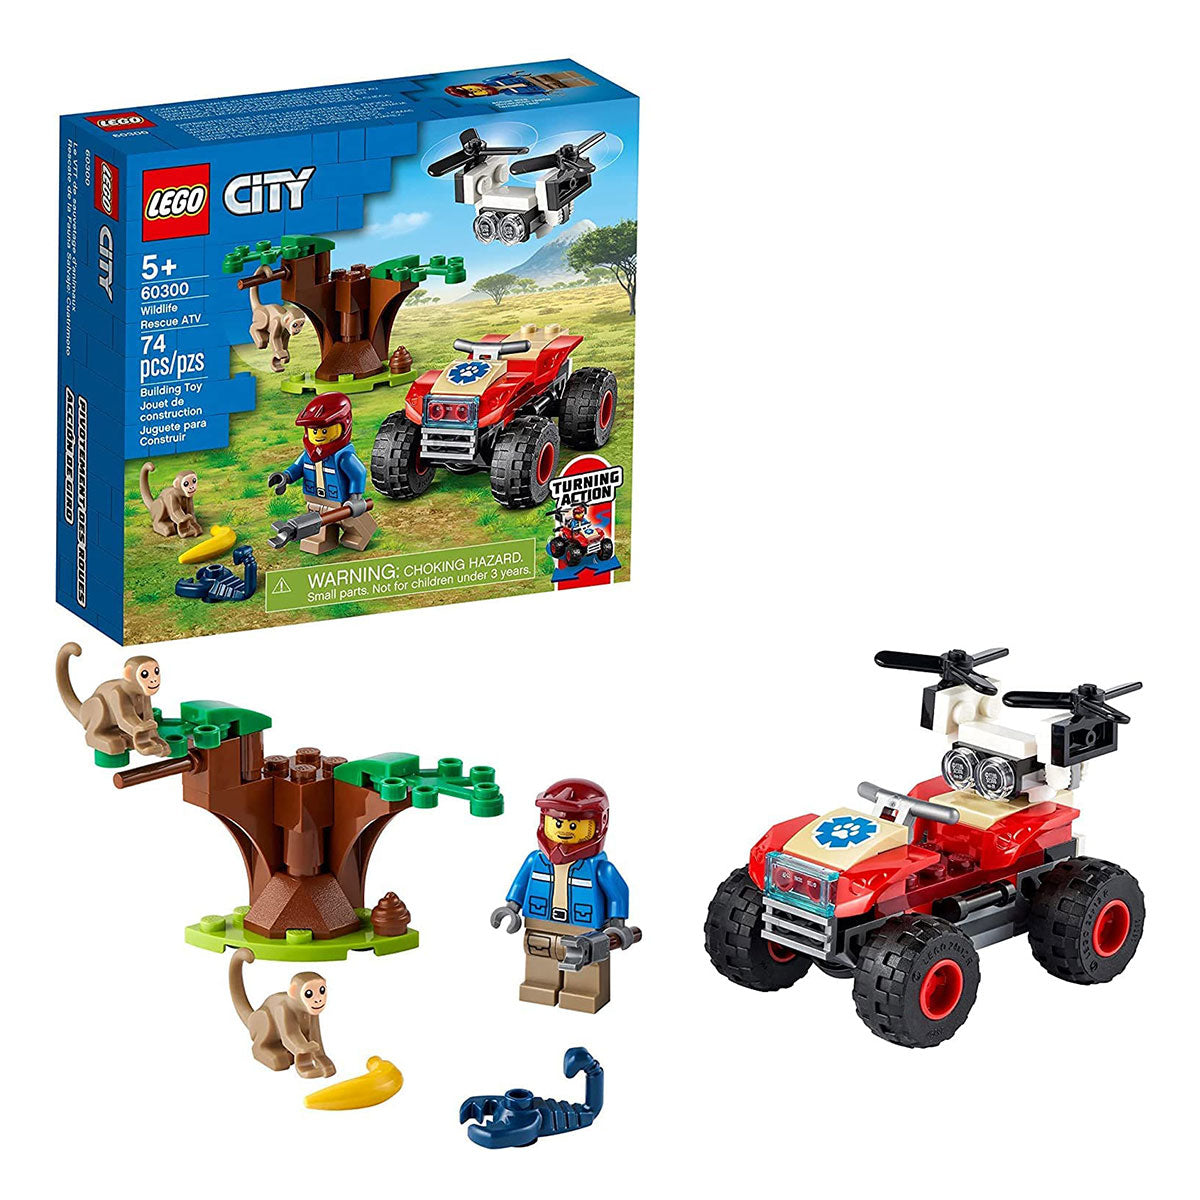 LEGO - City Wildlife Rescue ATV 60300